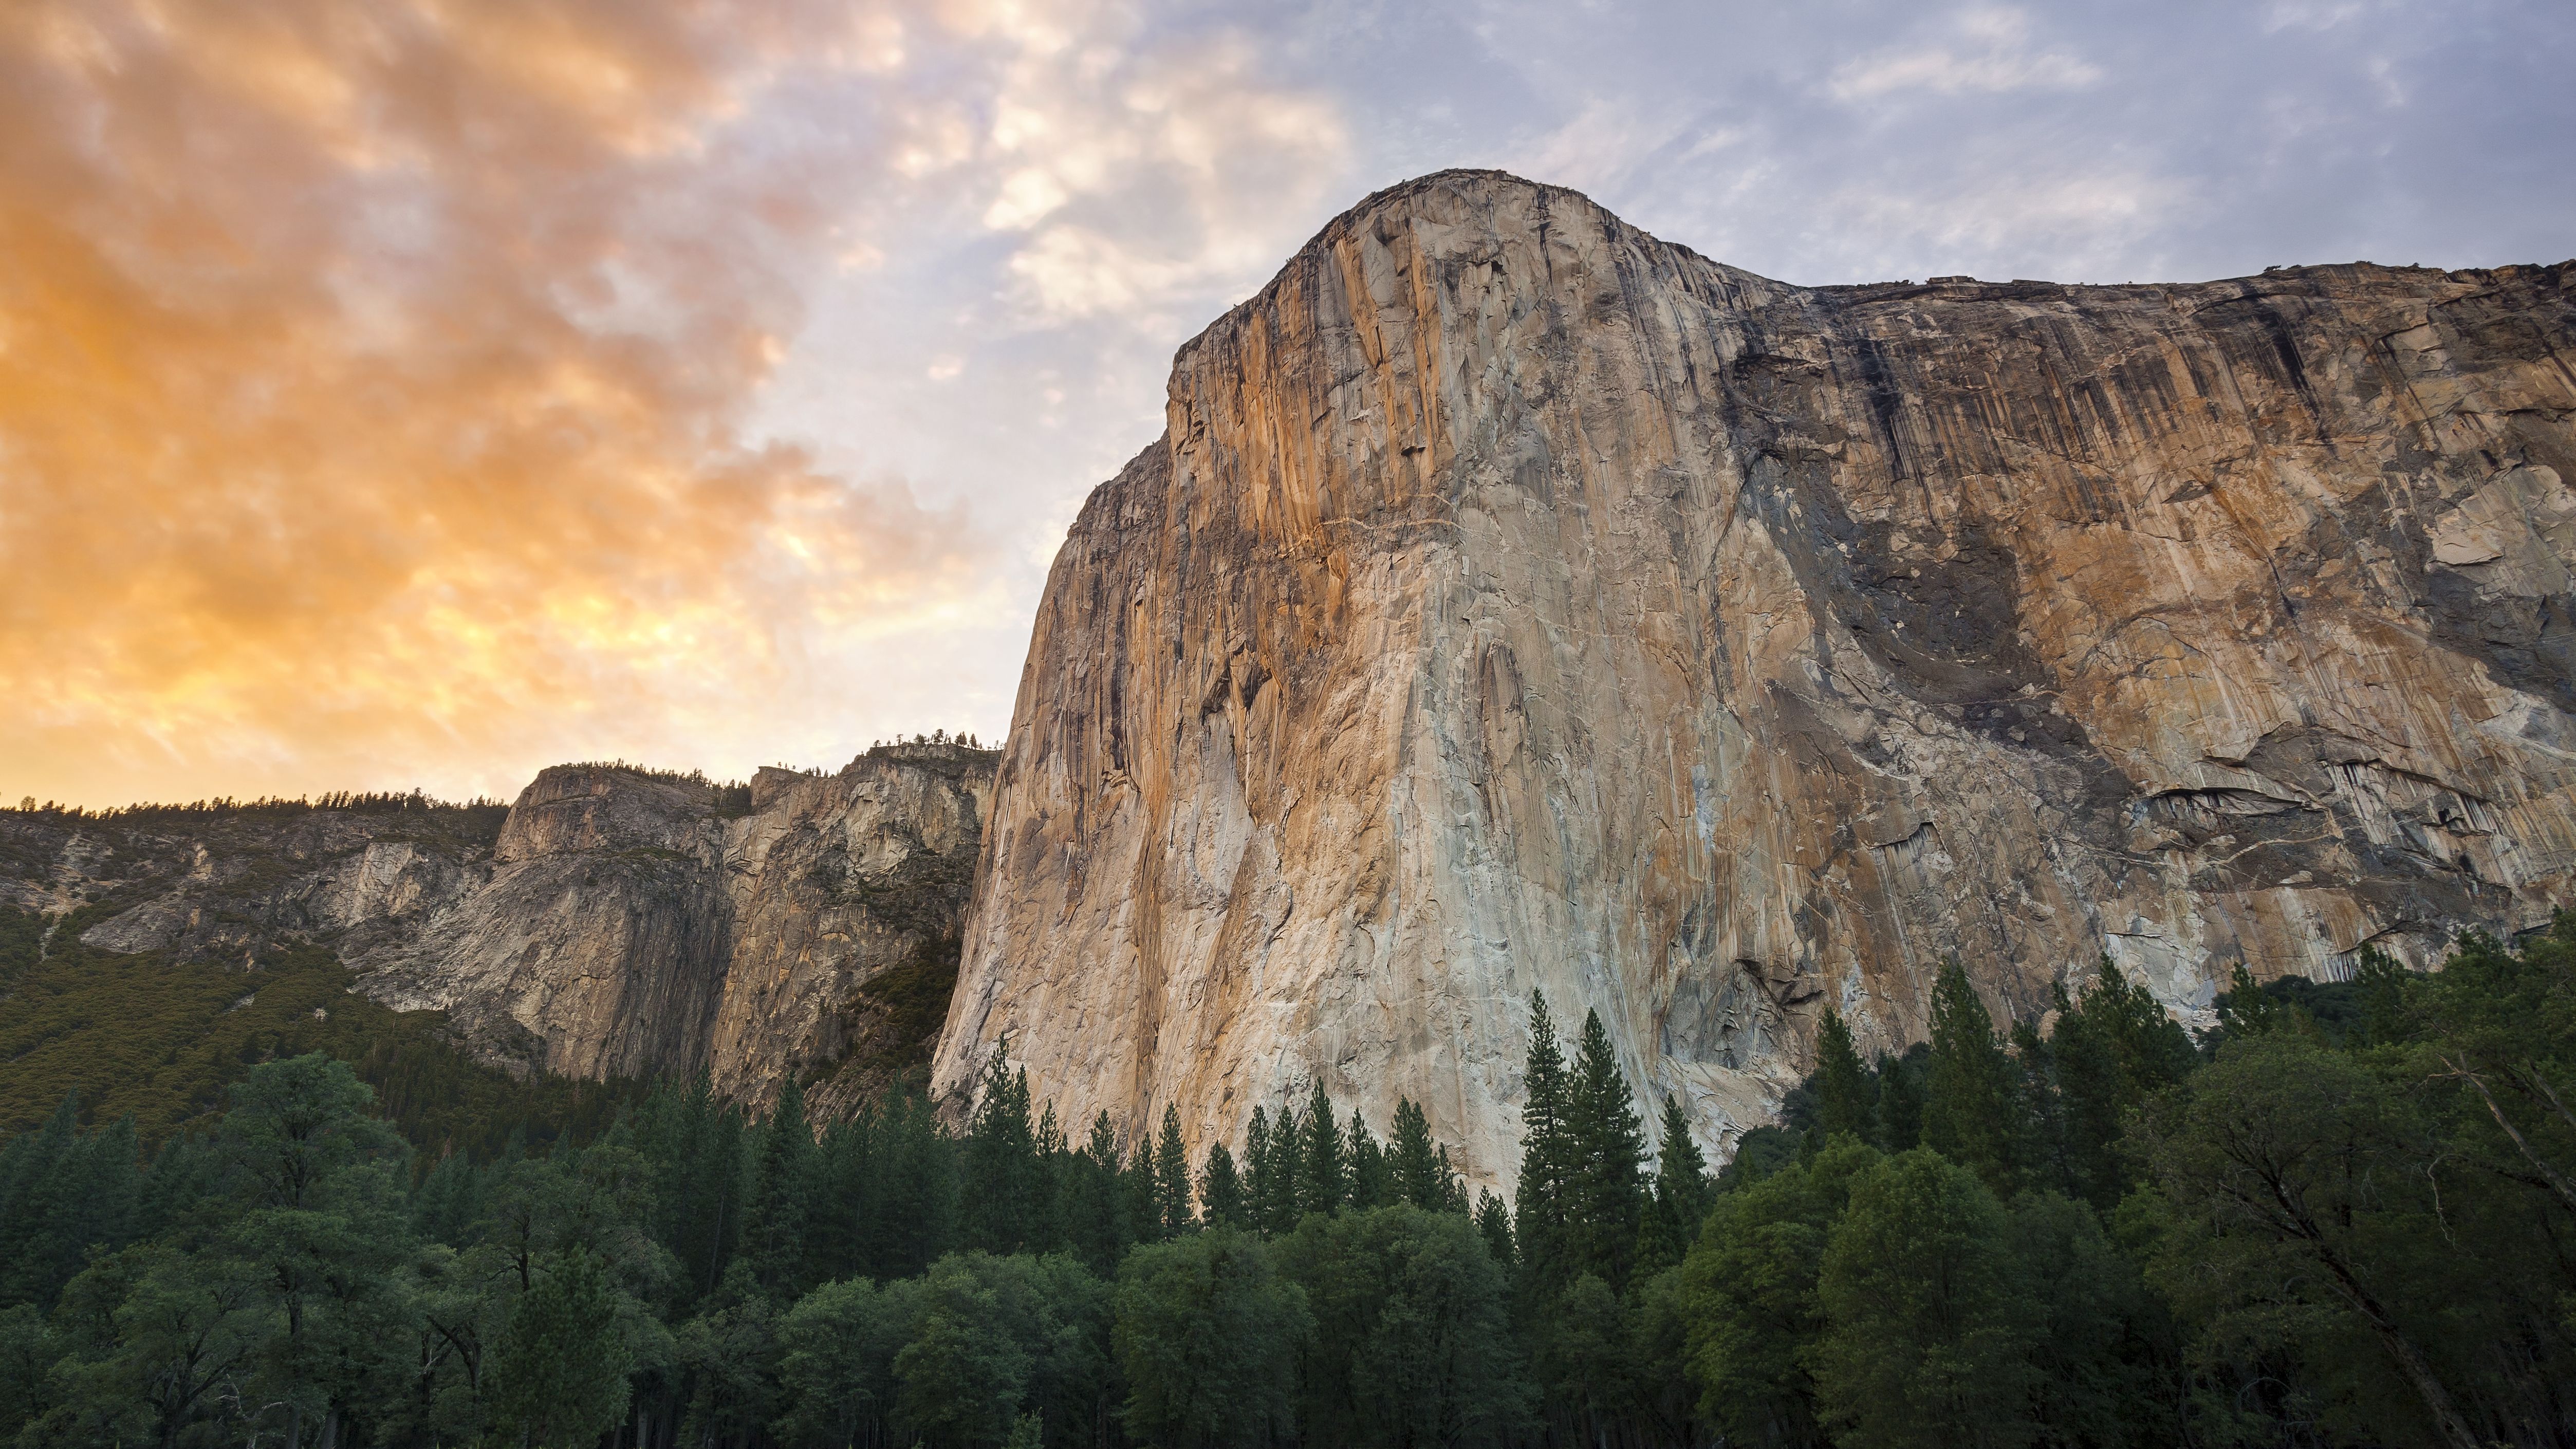 Download OS X Yosemite wallpapers